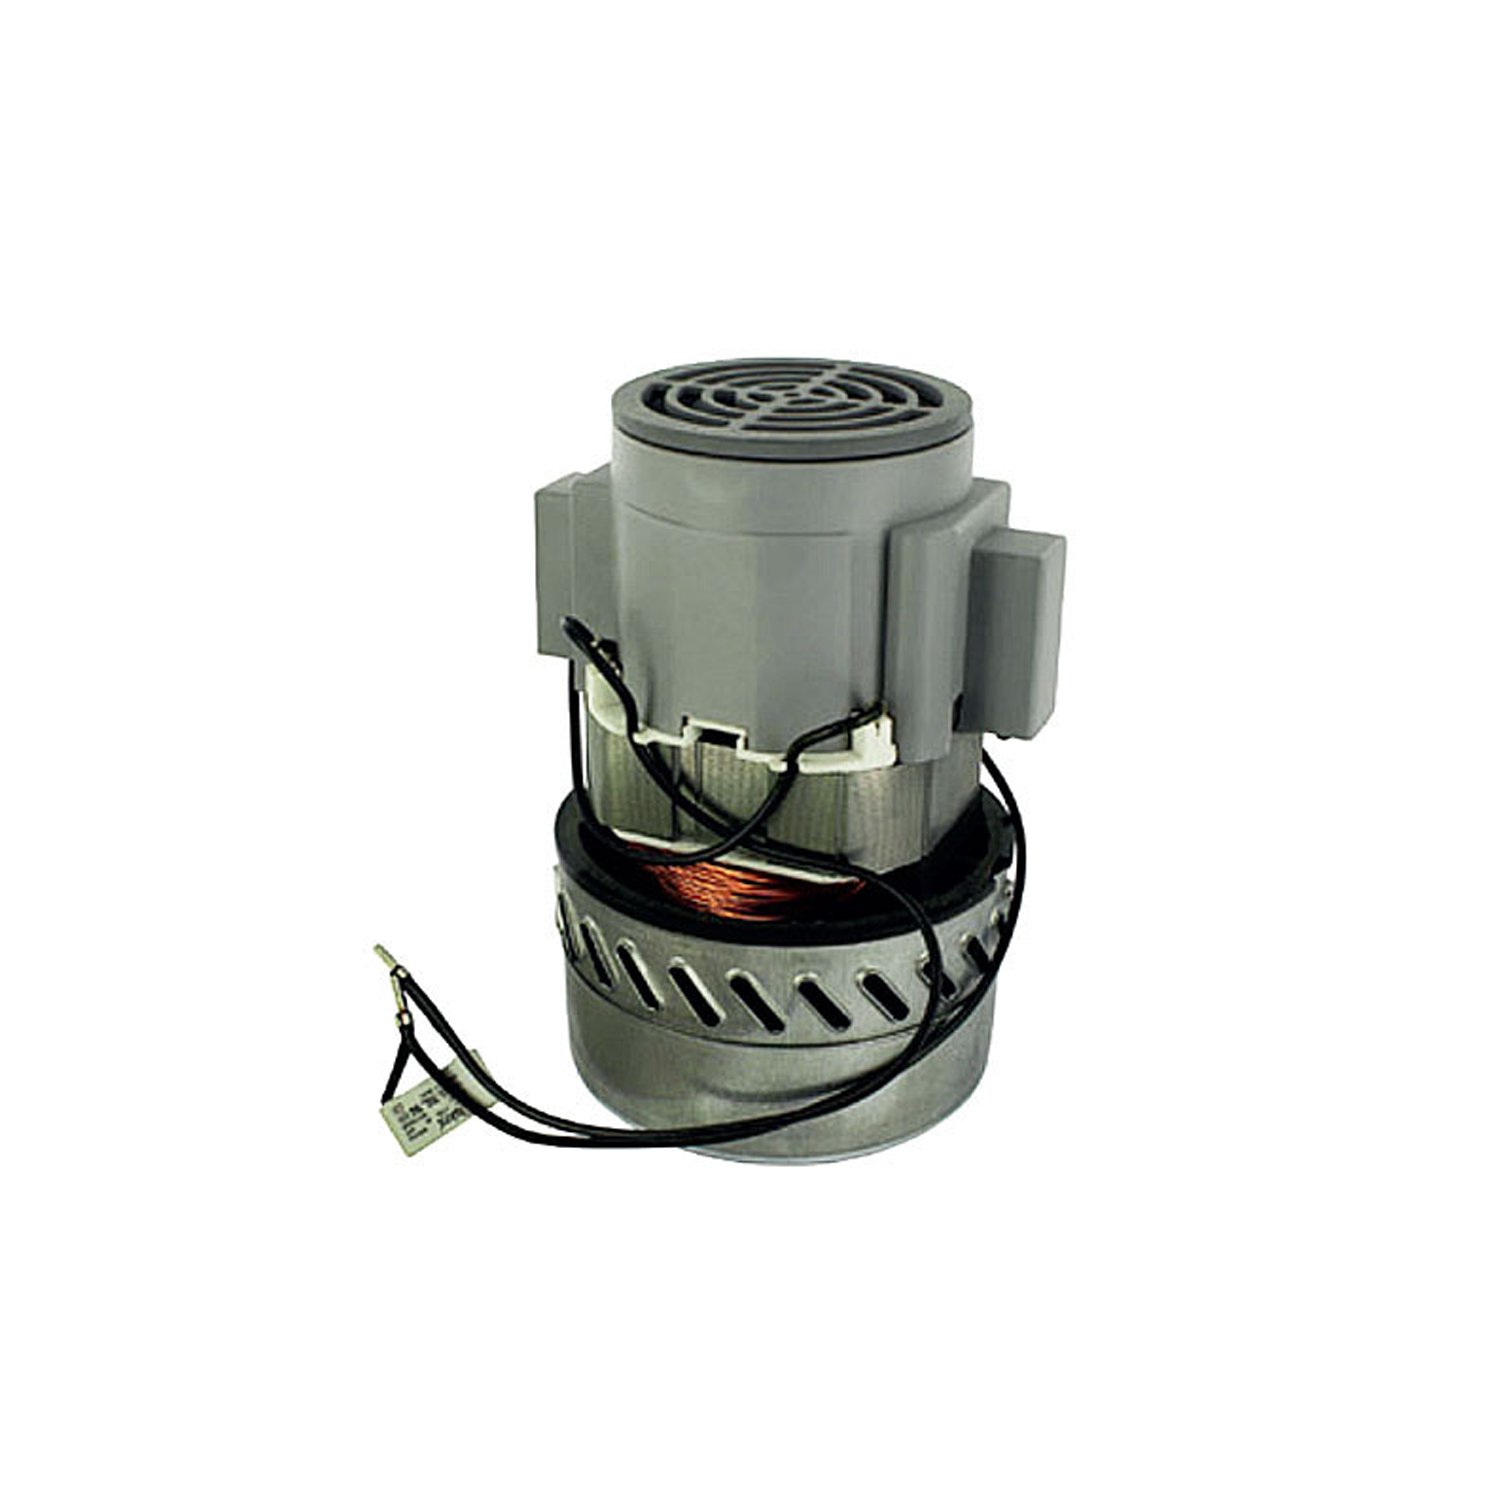 Vacuum cleaner motor, universal, 800 W/230 V, AMETEK 061300500, (D=107 mm, H=168 mm)